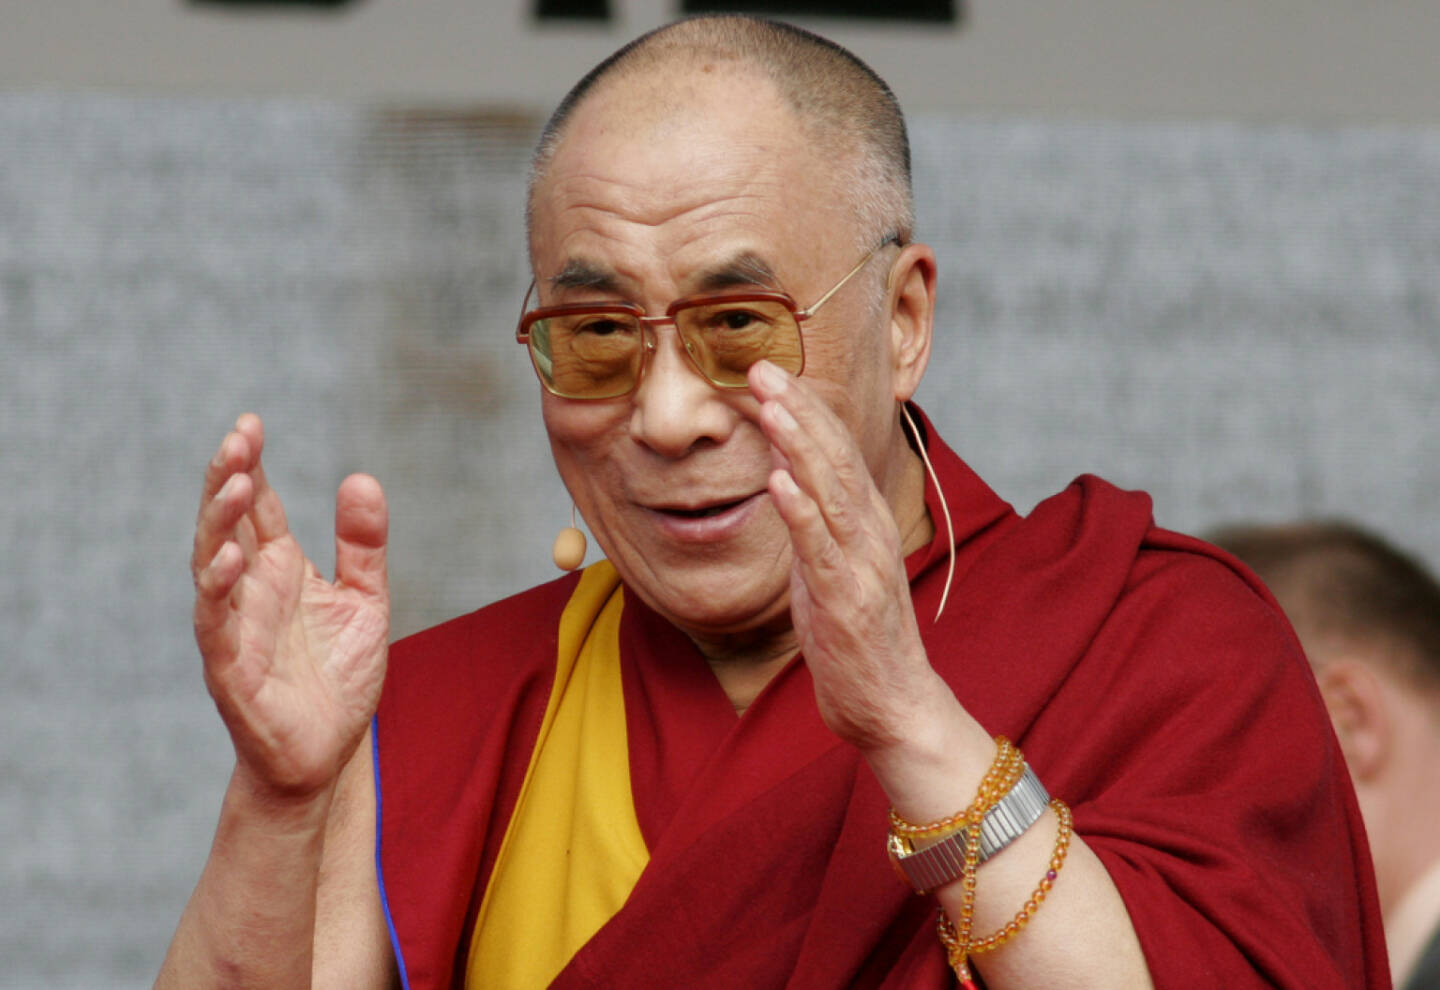 Dalai Lama, <a href=http://www.shutterstock.com/gallery-650296p1.html?cr=00&pl=edit-00>vipflash</a> / <a href=http://www.shutterstock.com/editorial?cr=00&pl=edit-00>Shutterstock.com</a>, vipflash / Shutterstock.com